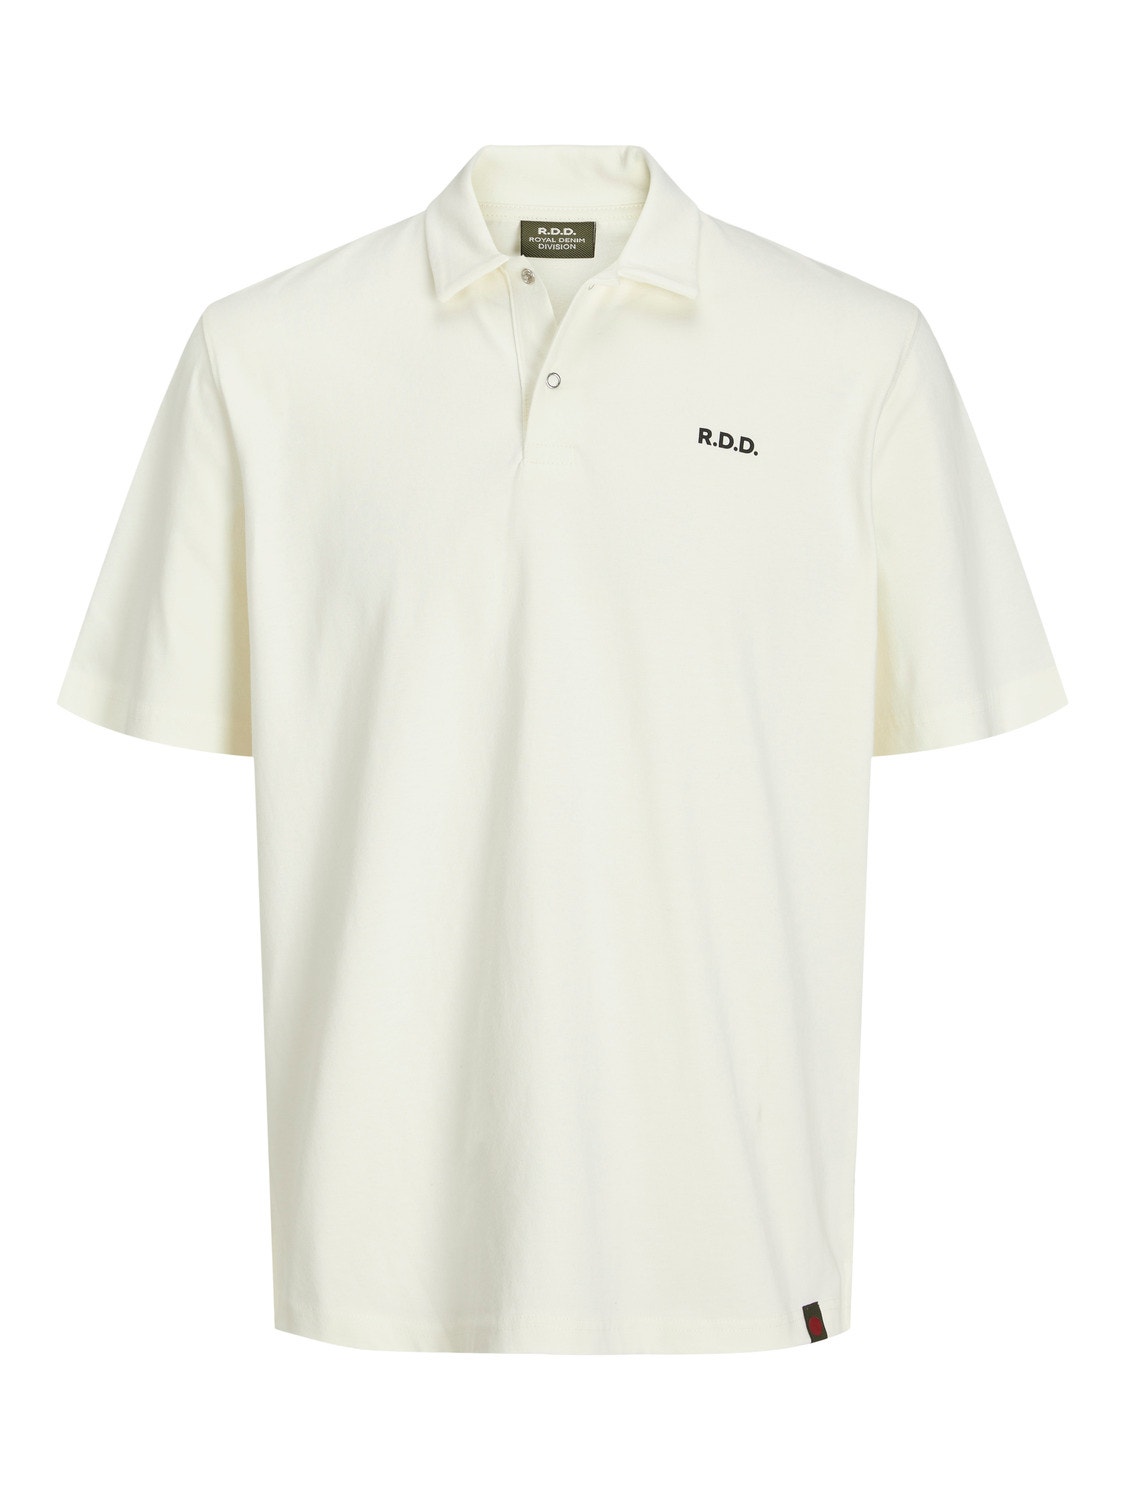 Jack & Jones RDD T-shirt Logo Polo -Egret - 12232814